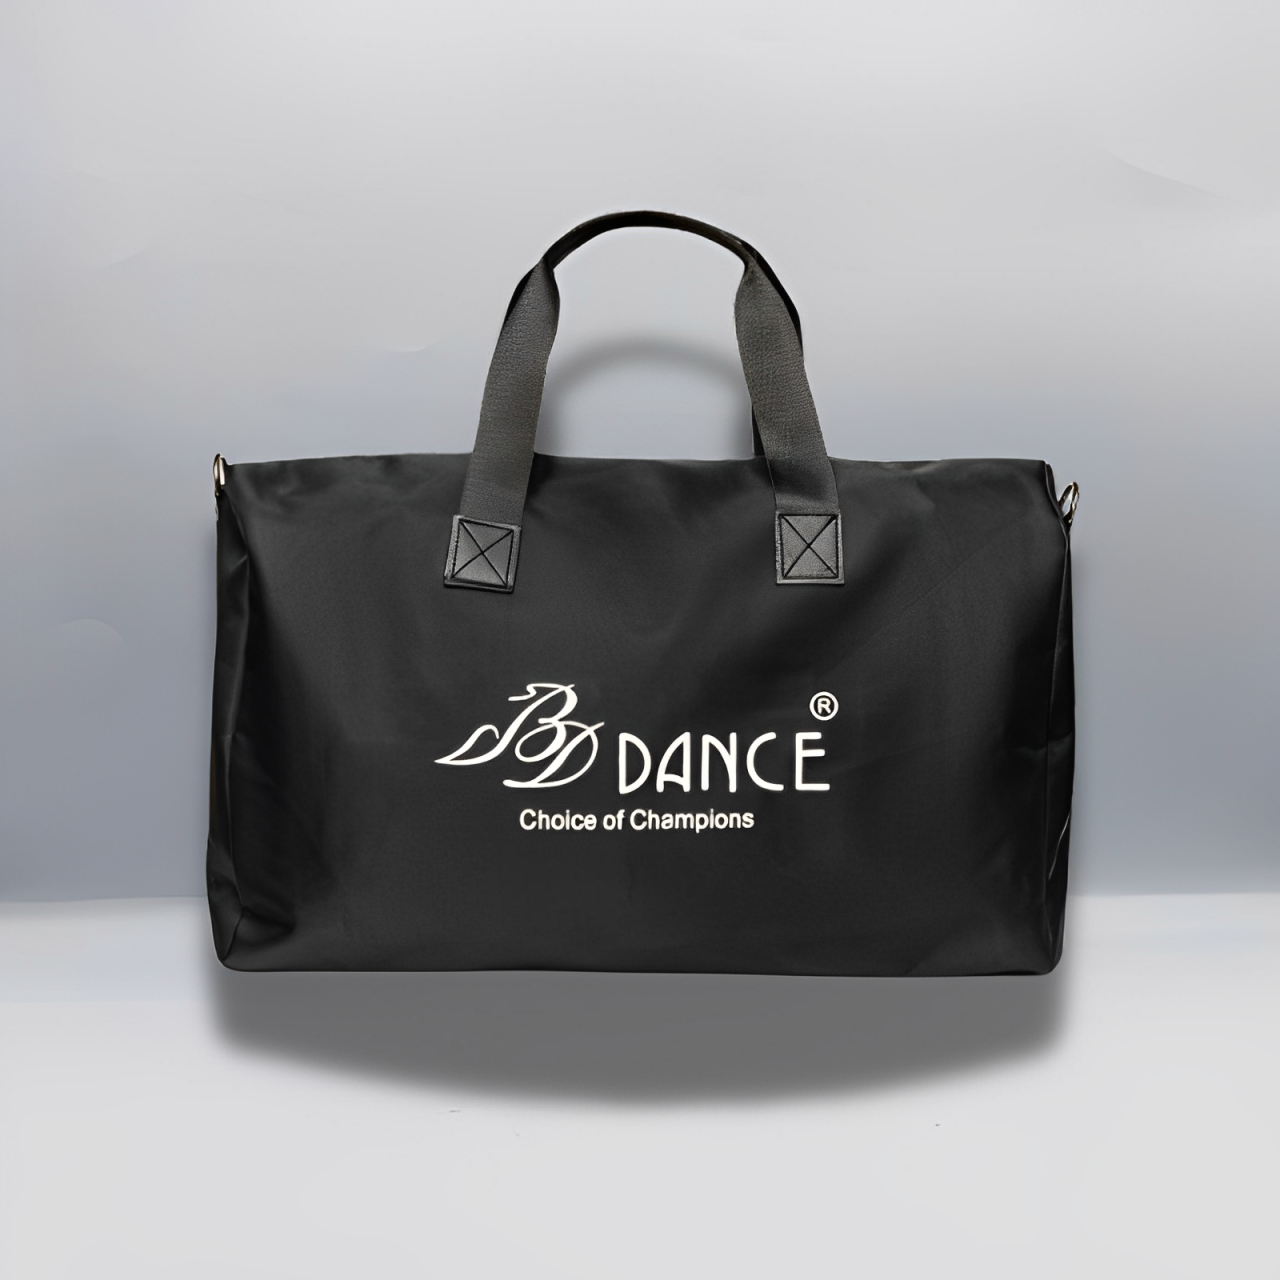 Traveling &amp; Practice bag - BD DANCE